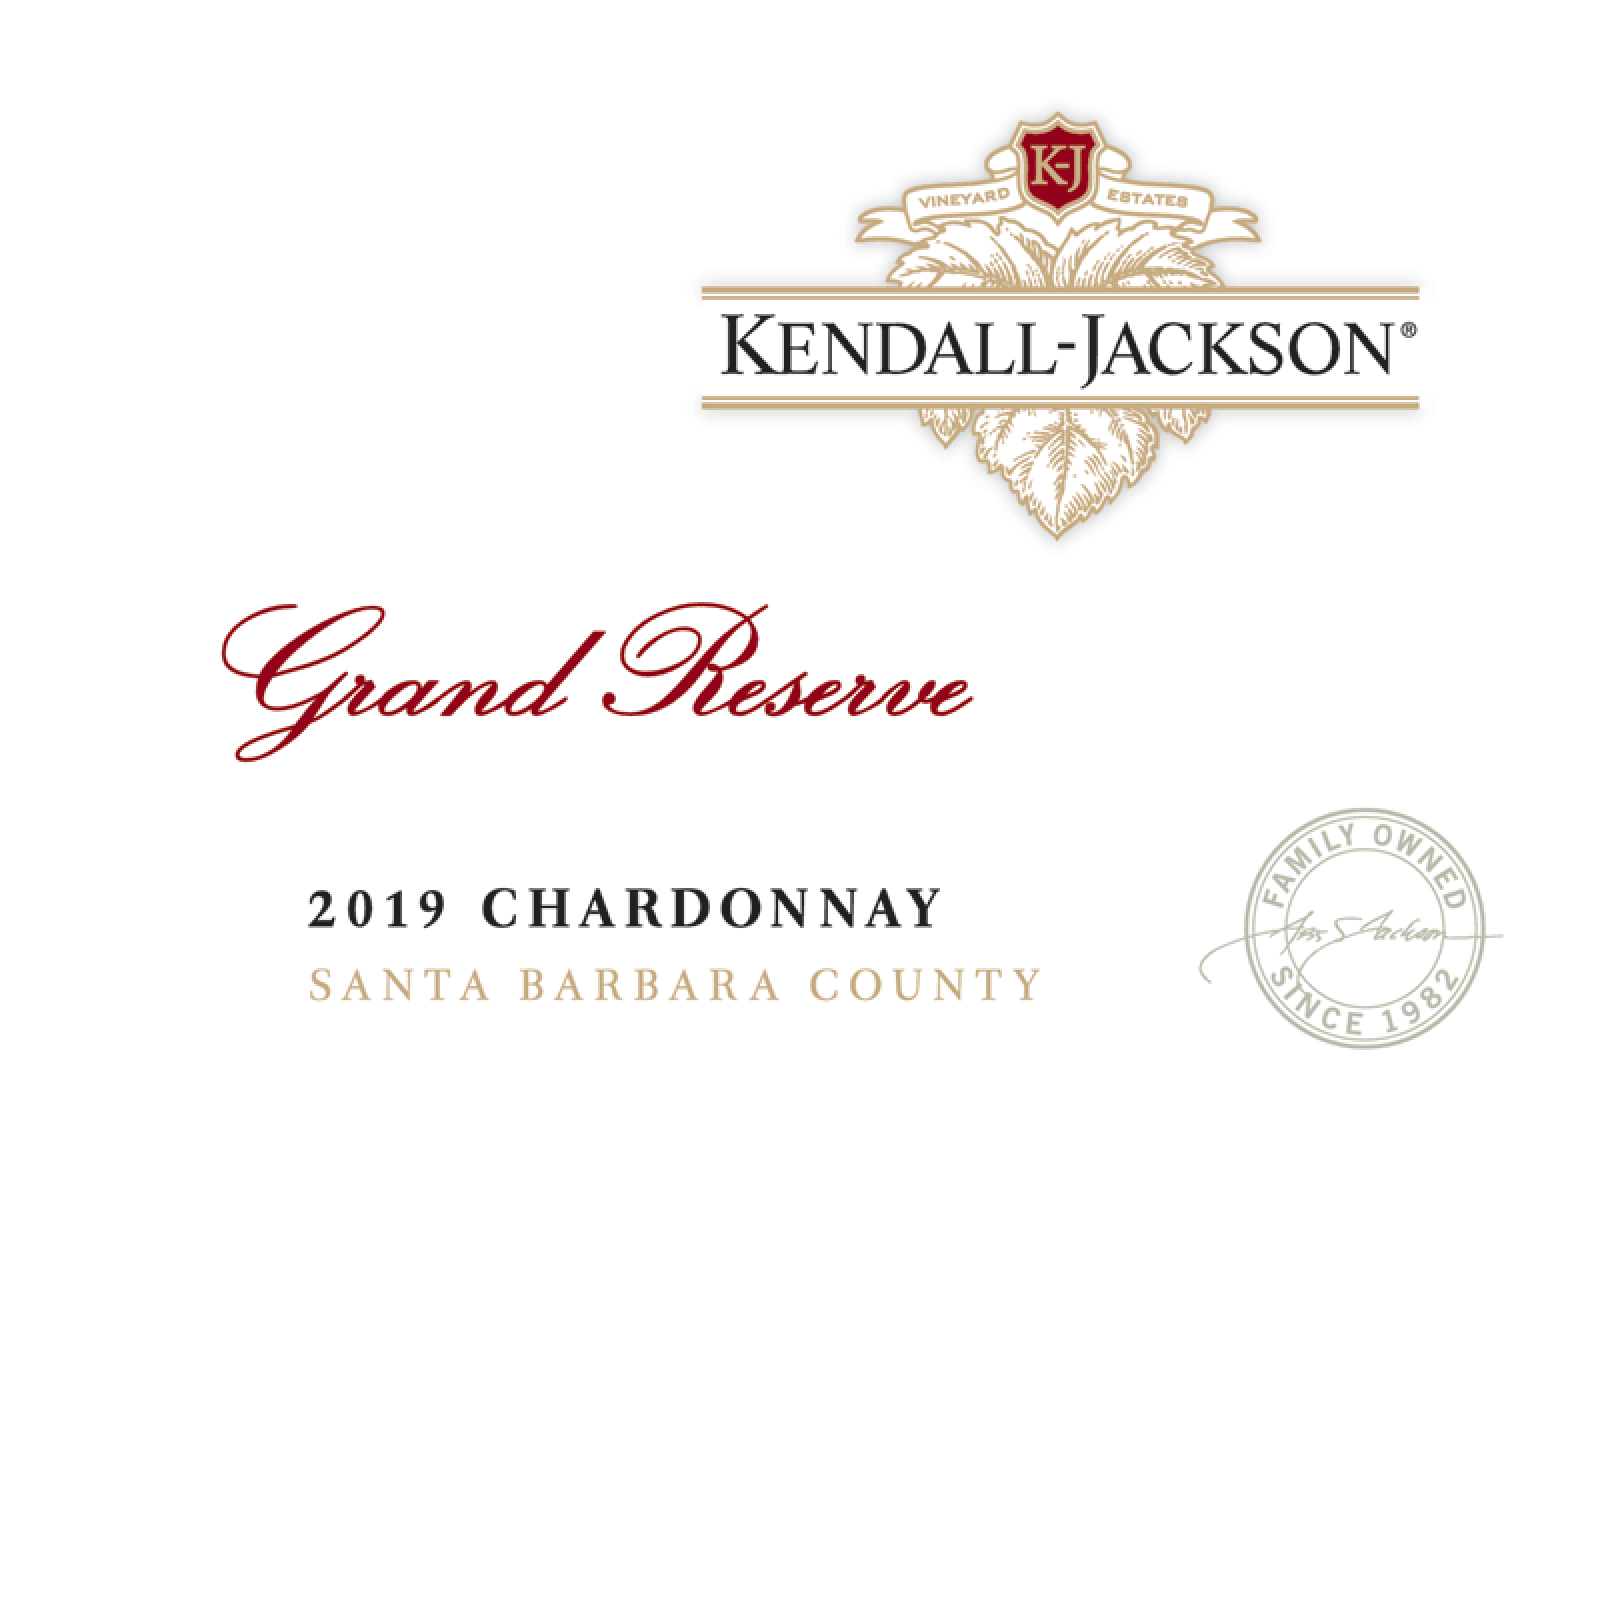 Kendall-Jackson Grand Reserve Chardonnay 2019